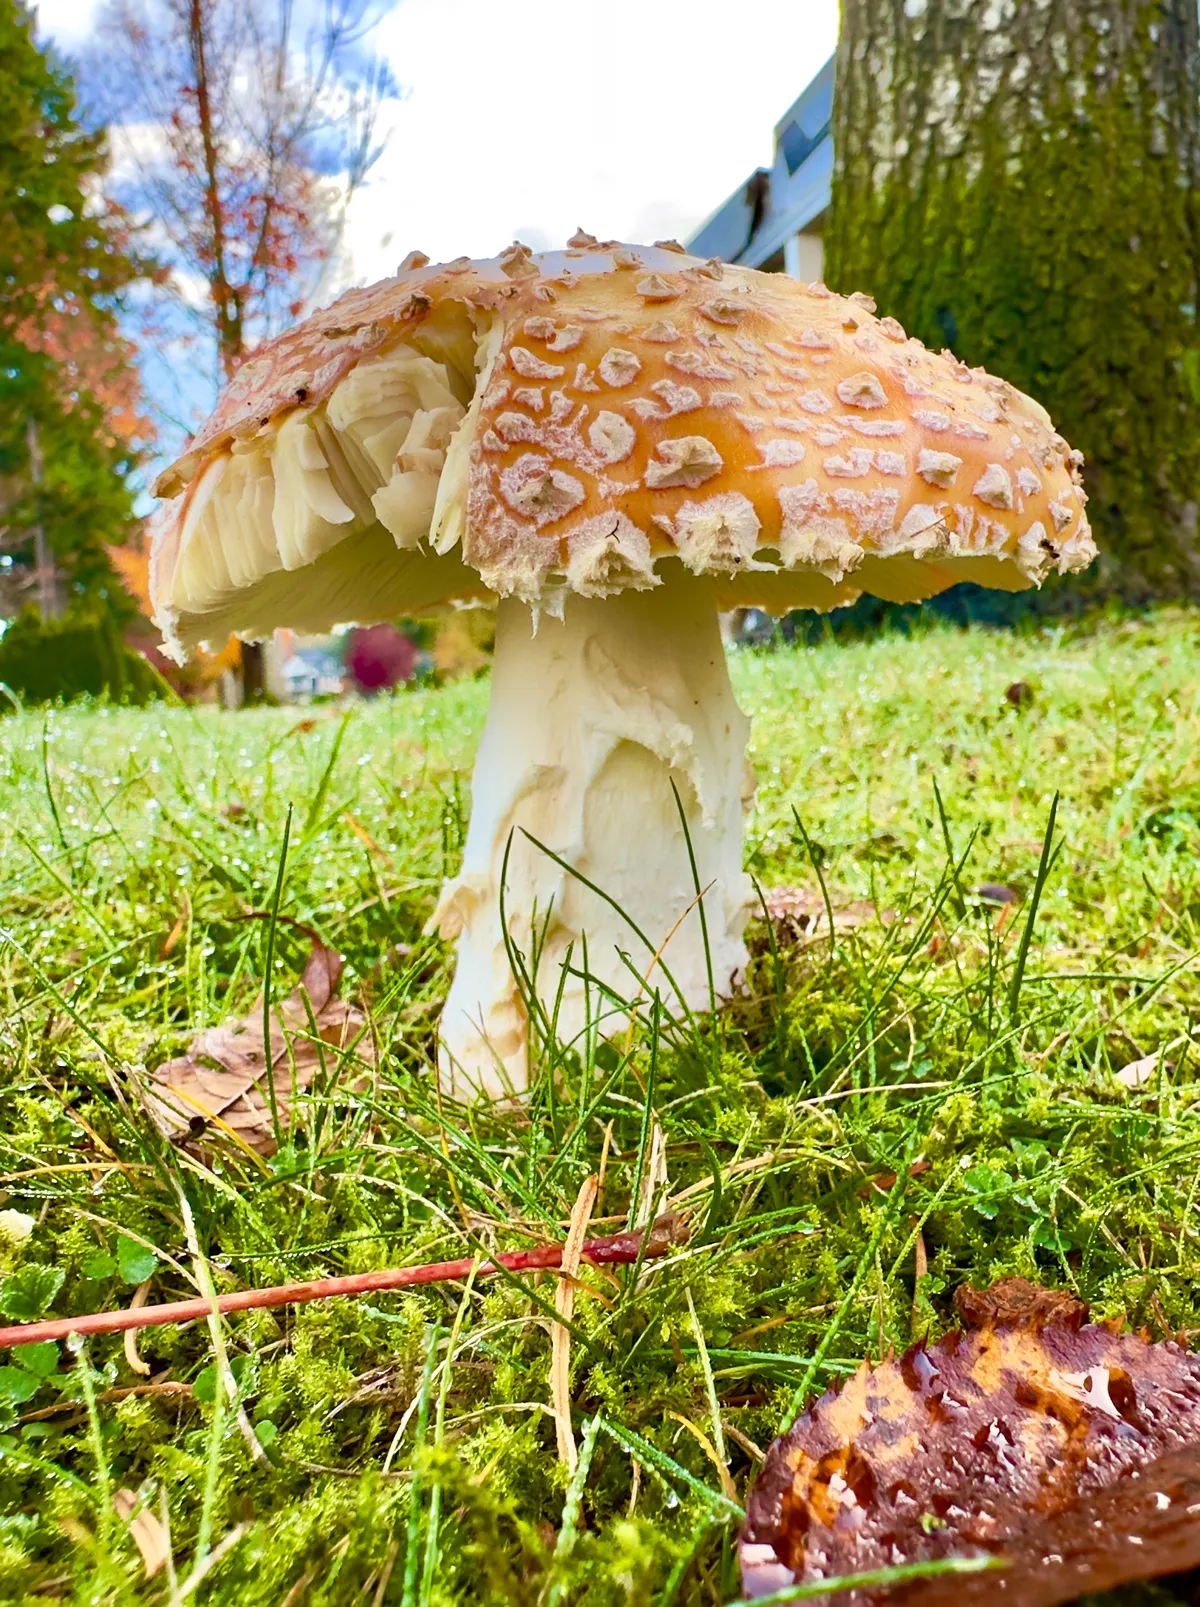 Large mushroom in the grass field